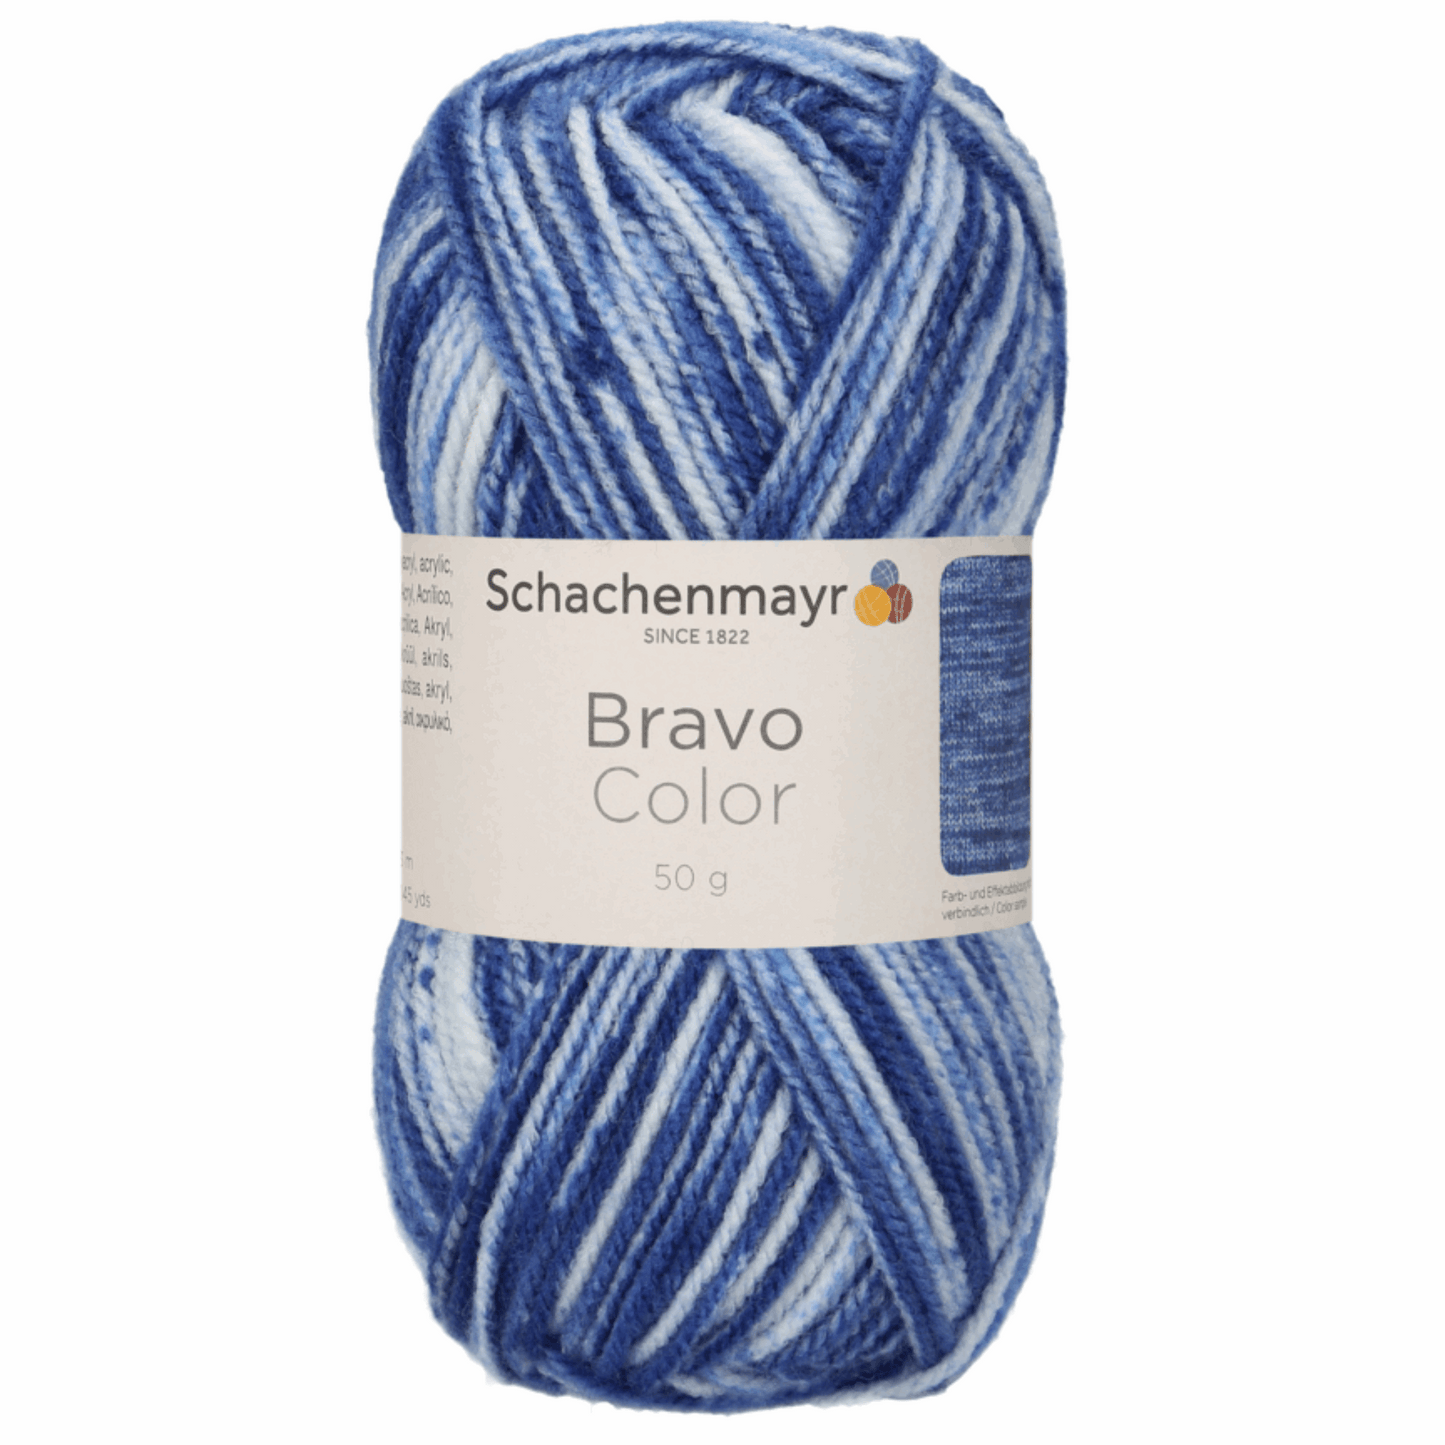 Schachenmayr Bravo Color 50g, 90421, Farbe Royal Denim 2113